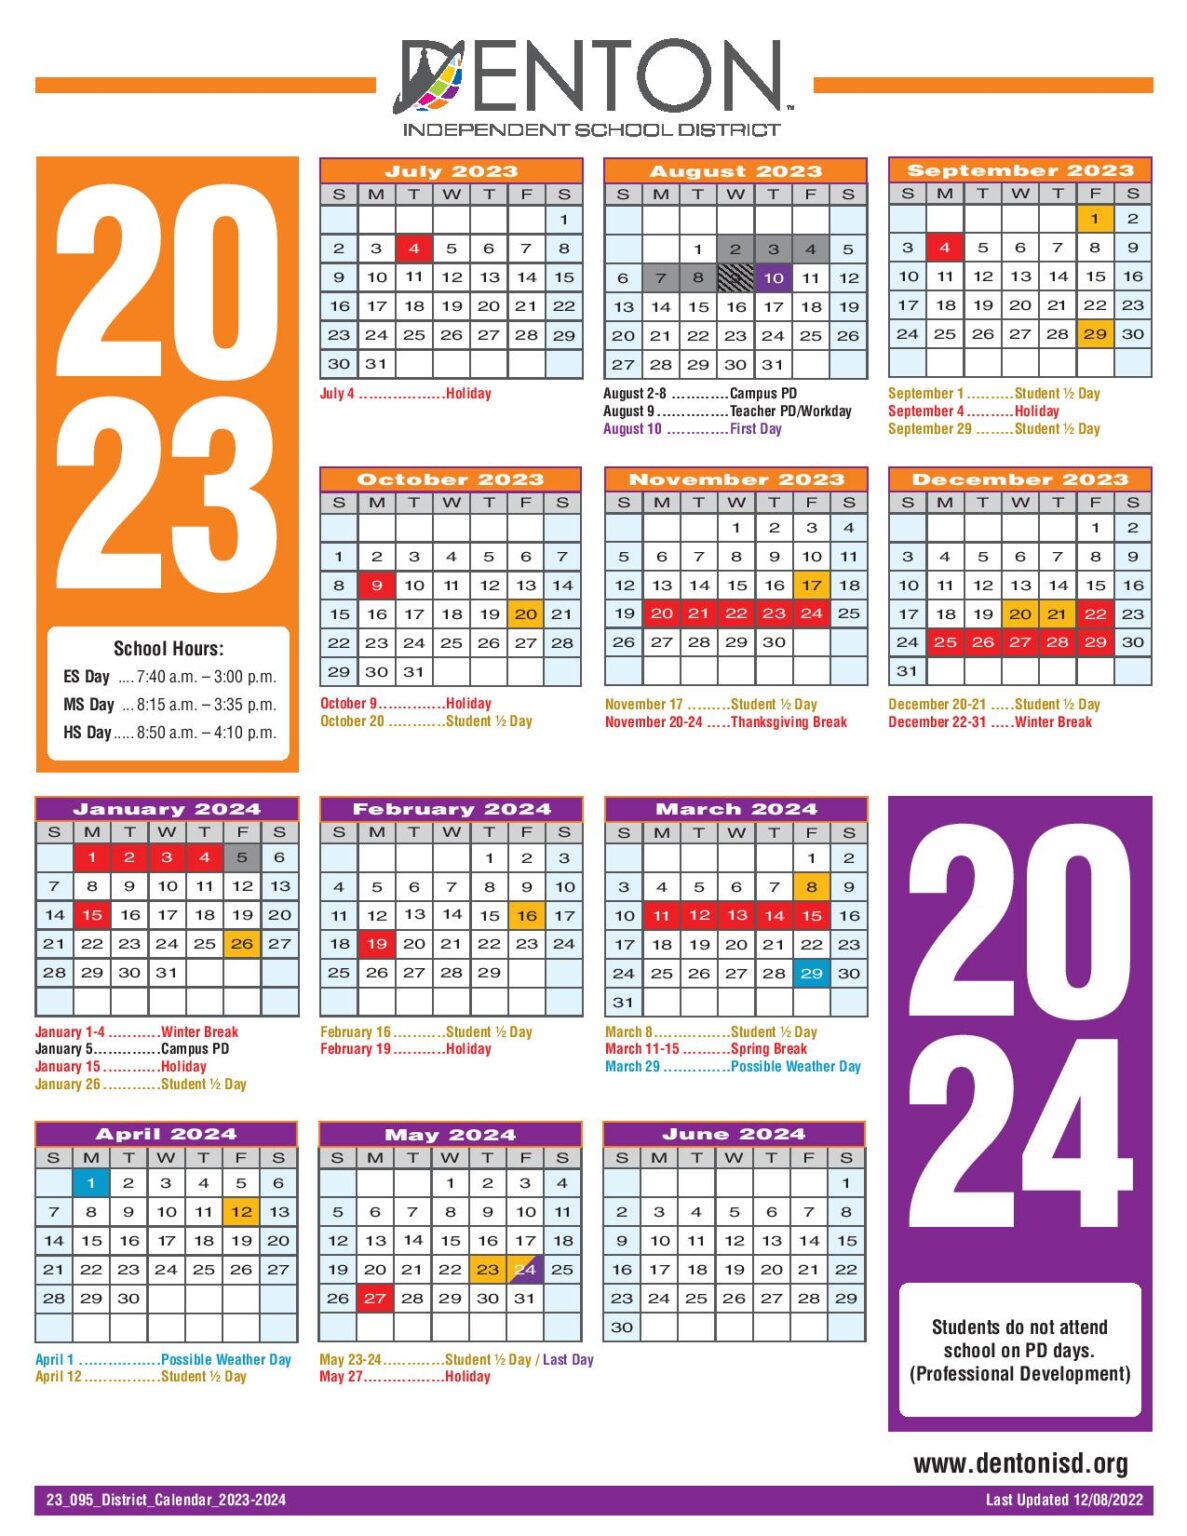 Denton Independent School District Calendar 20232024 in PDF